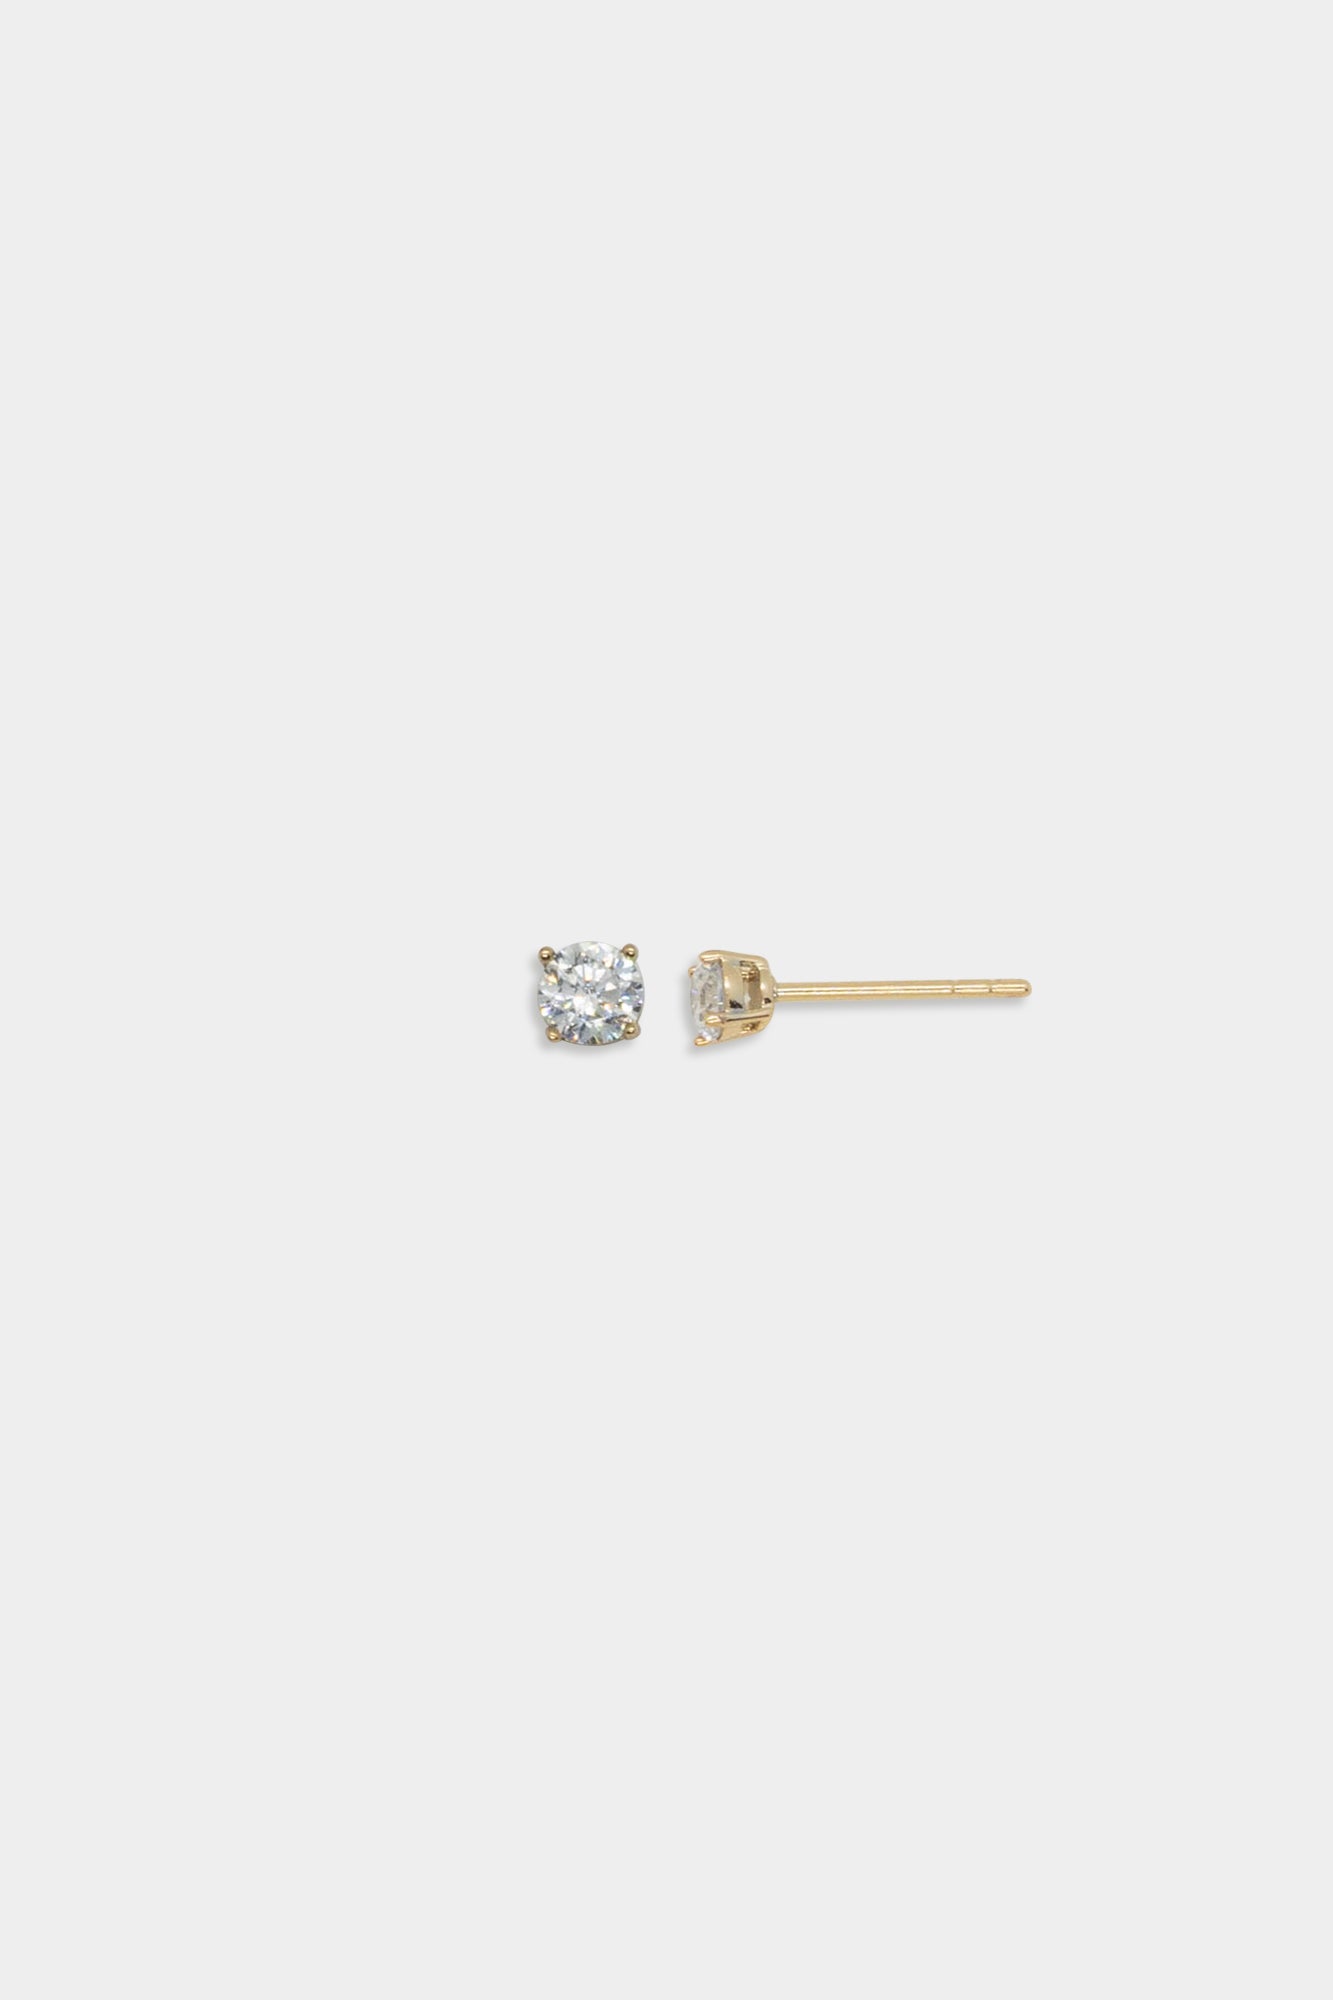 Soleil 18k Gold Stud Earring in Crystal Clear (4mm)